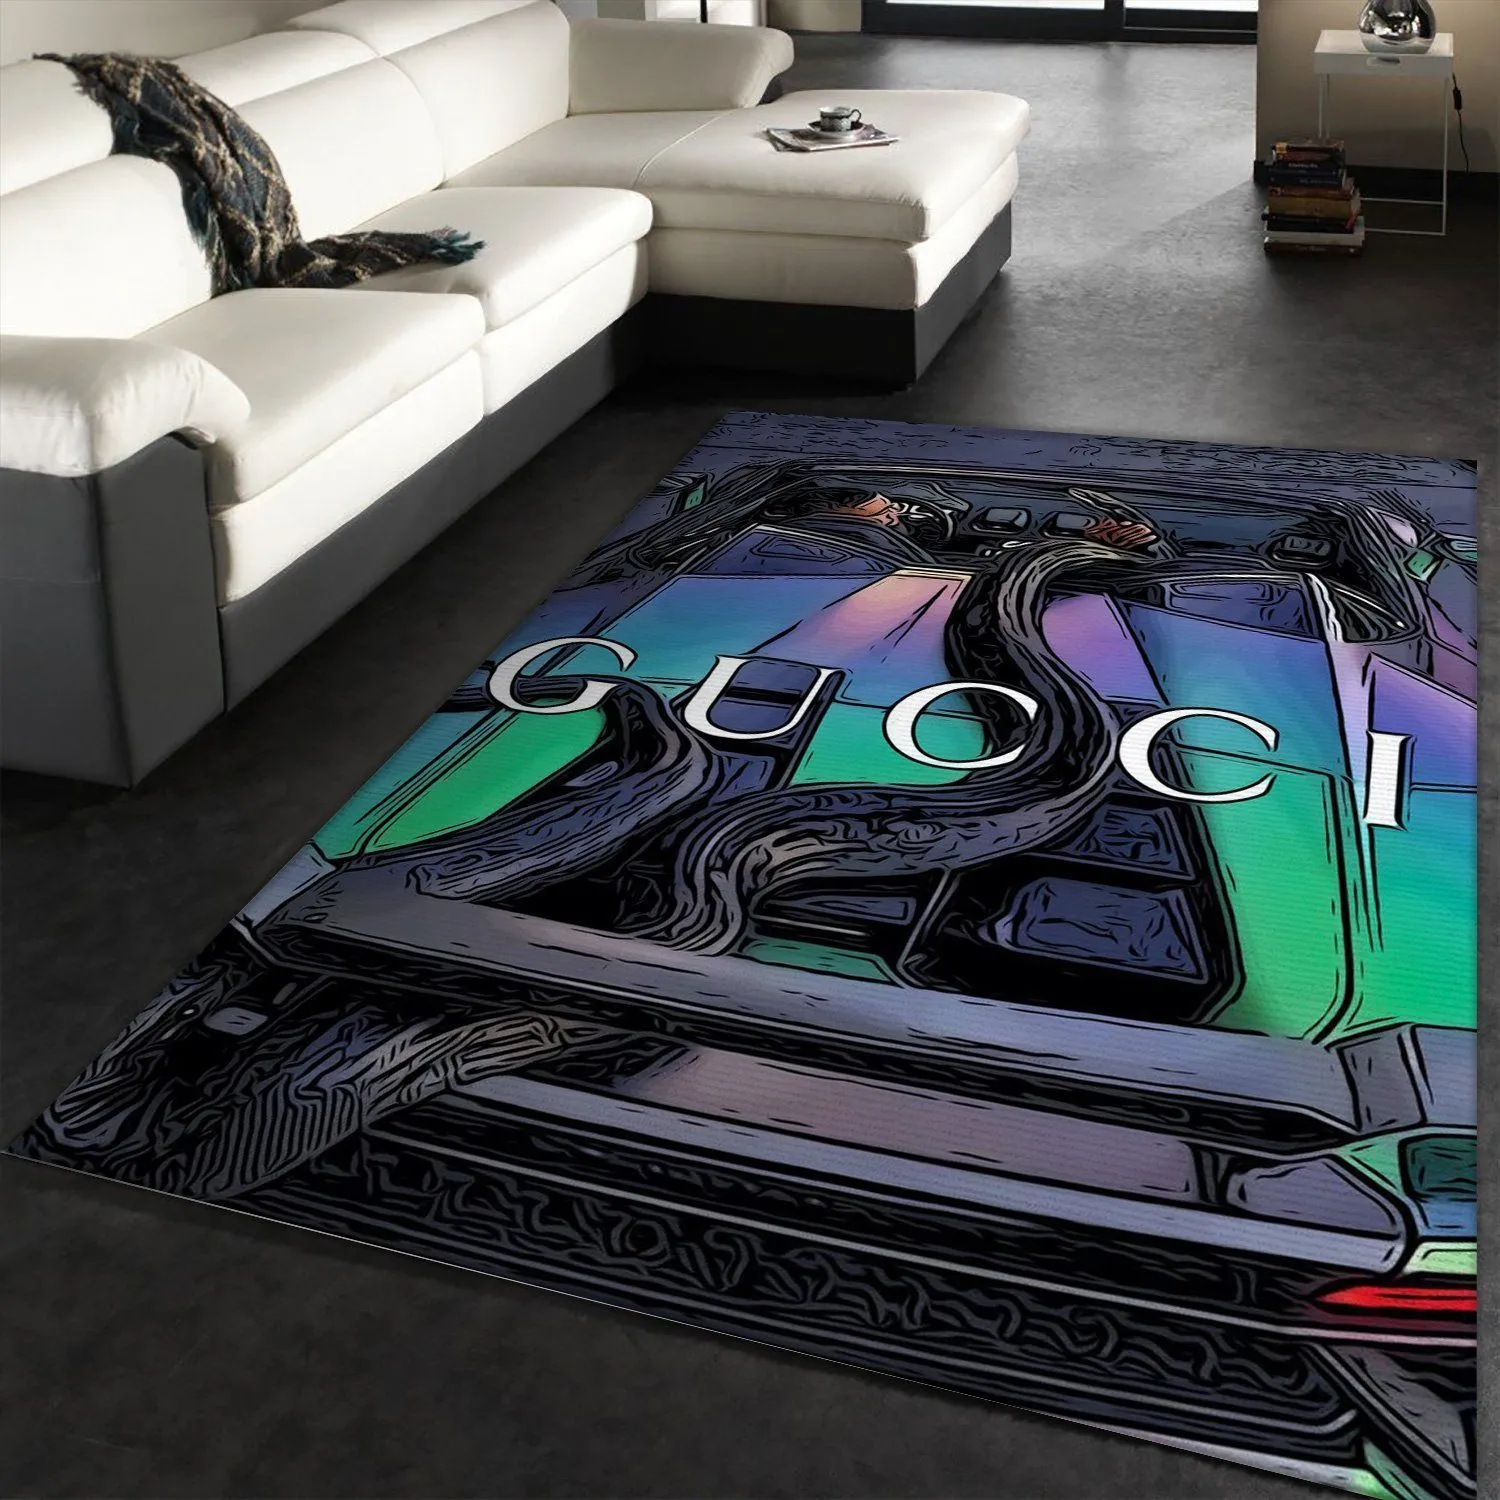 Gucci Rectangle Rug Area Carpet Home Decor Fashion Brand Luxury Door Mat